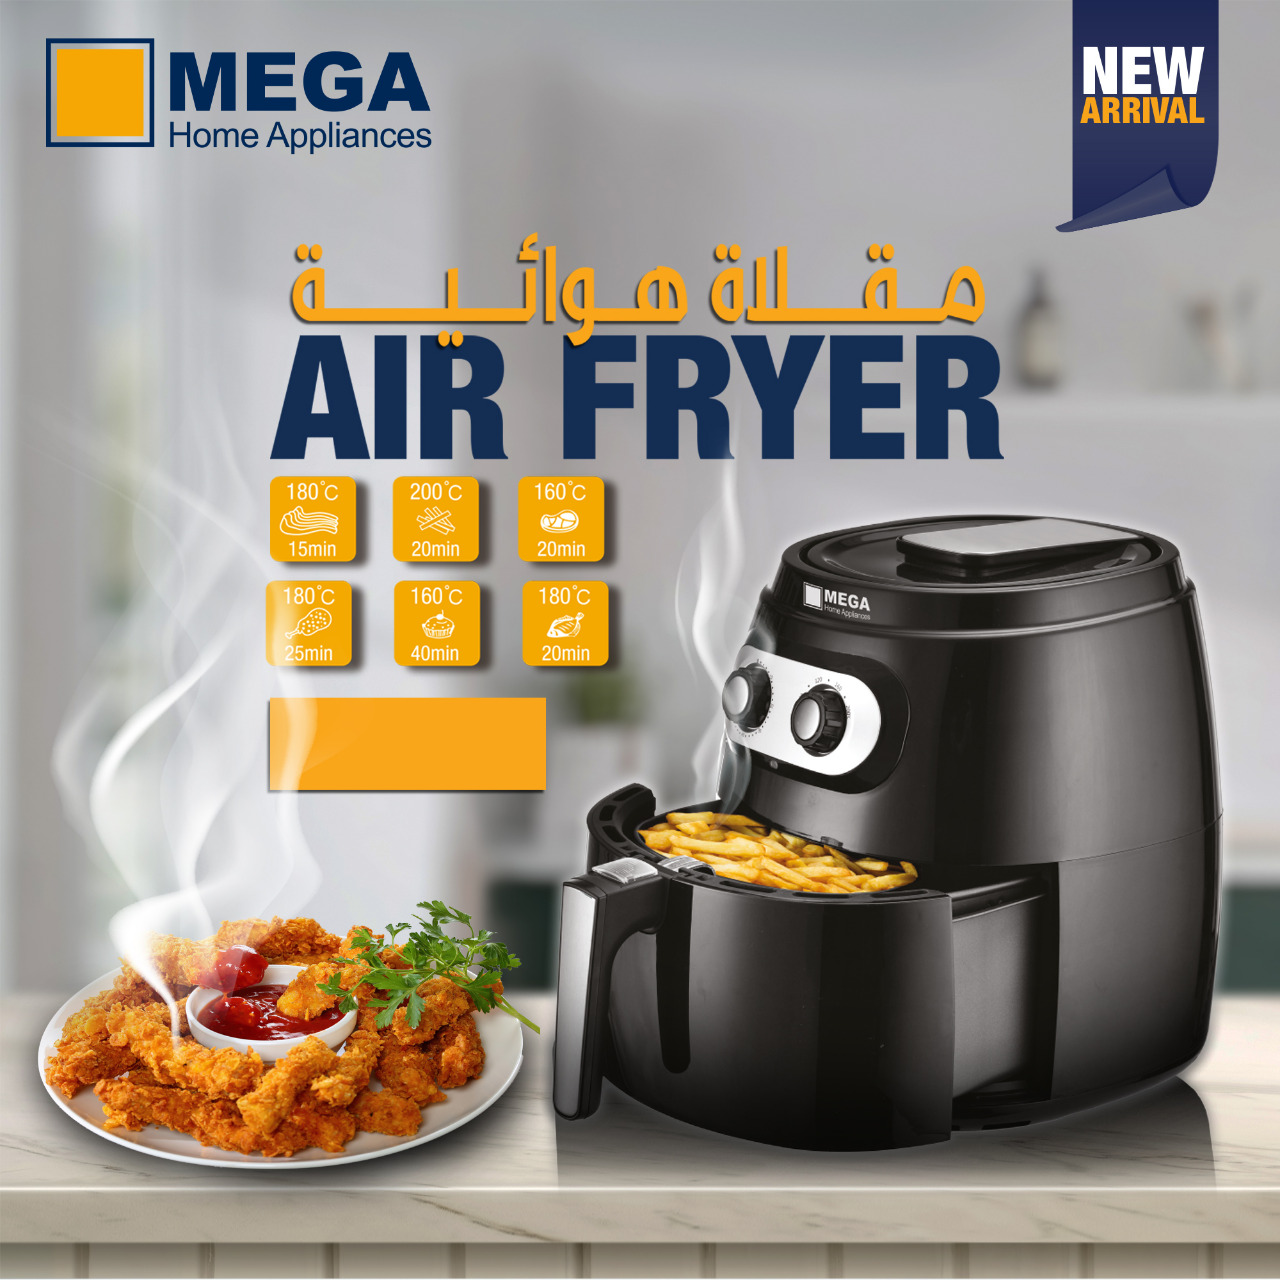 Mega air fryer, large size, capacity 7.2-8.2 liters, 1800 watts 